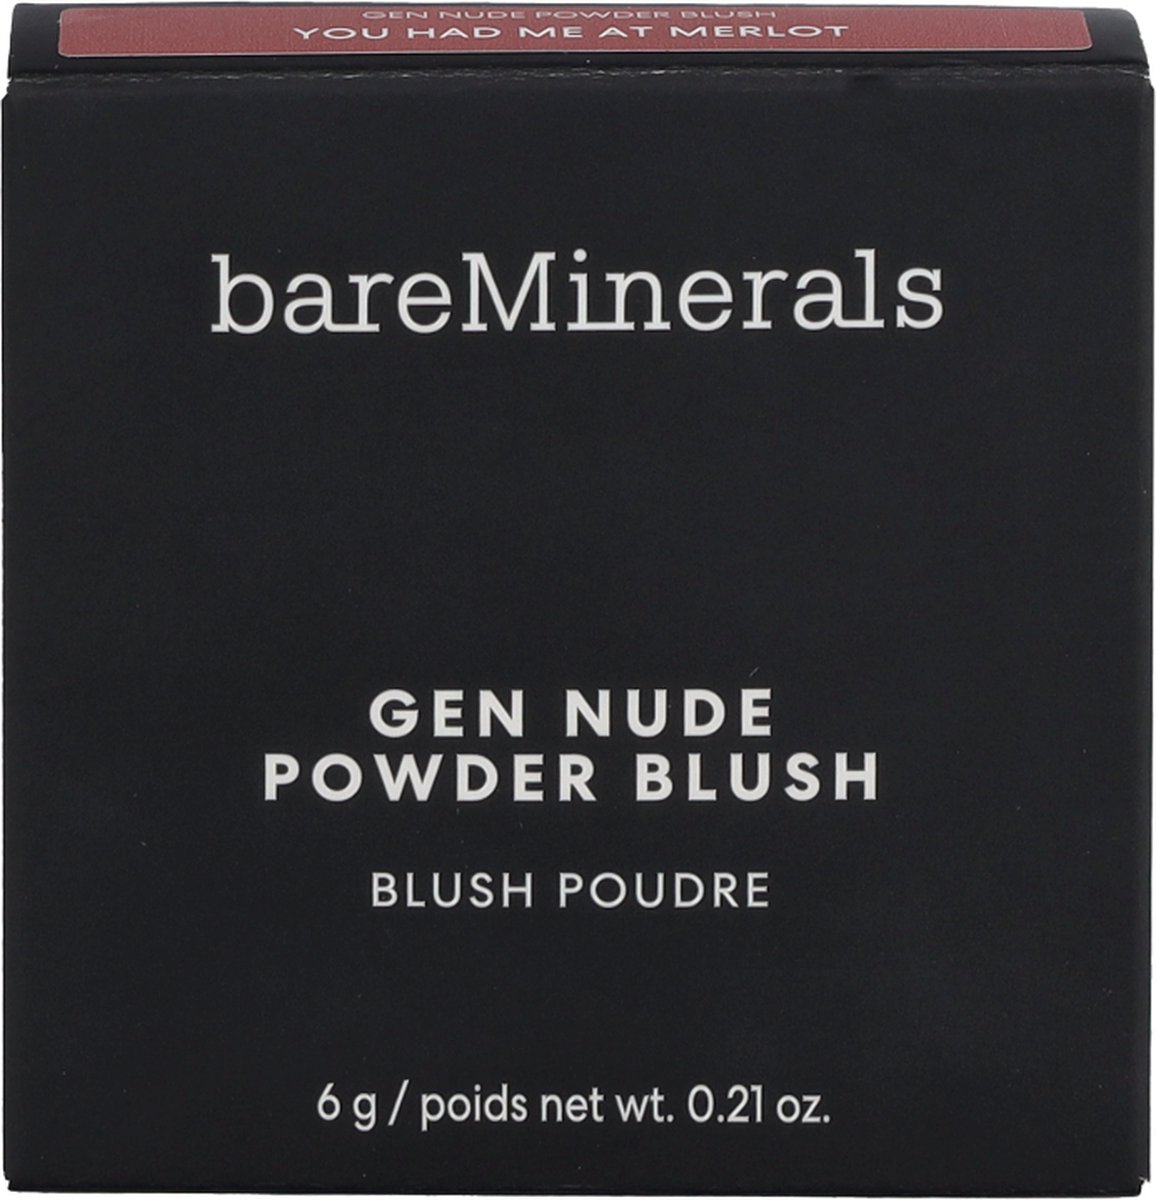 bareMinerals - Gen Nude Powder Blush - You Had Me at Merlot